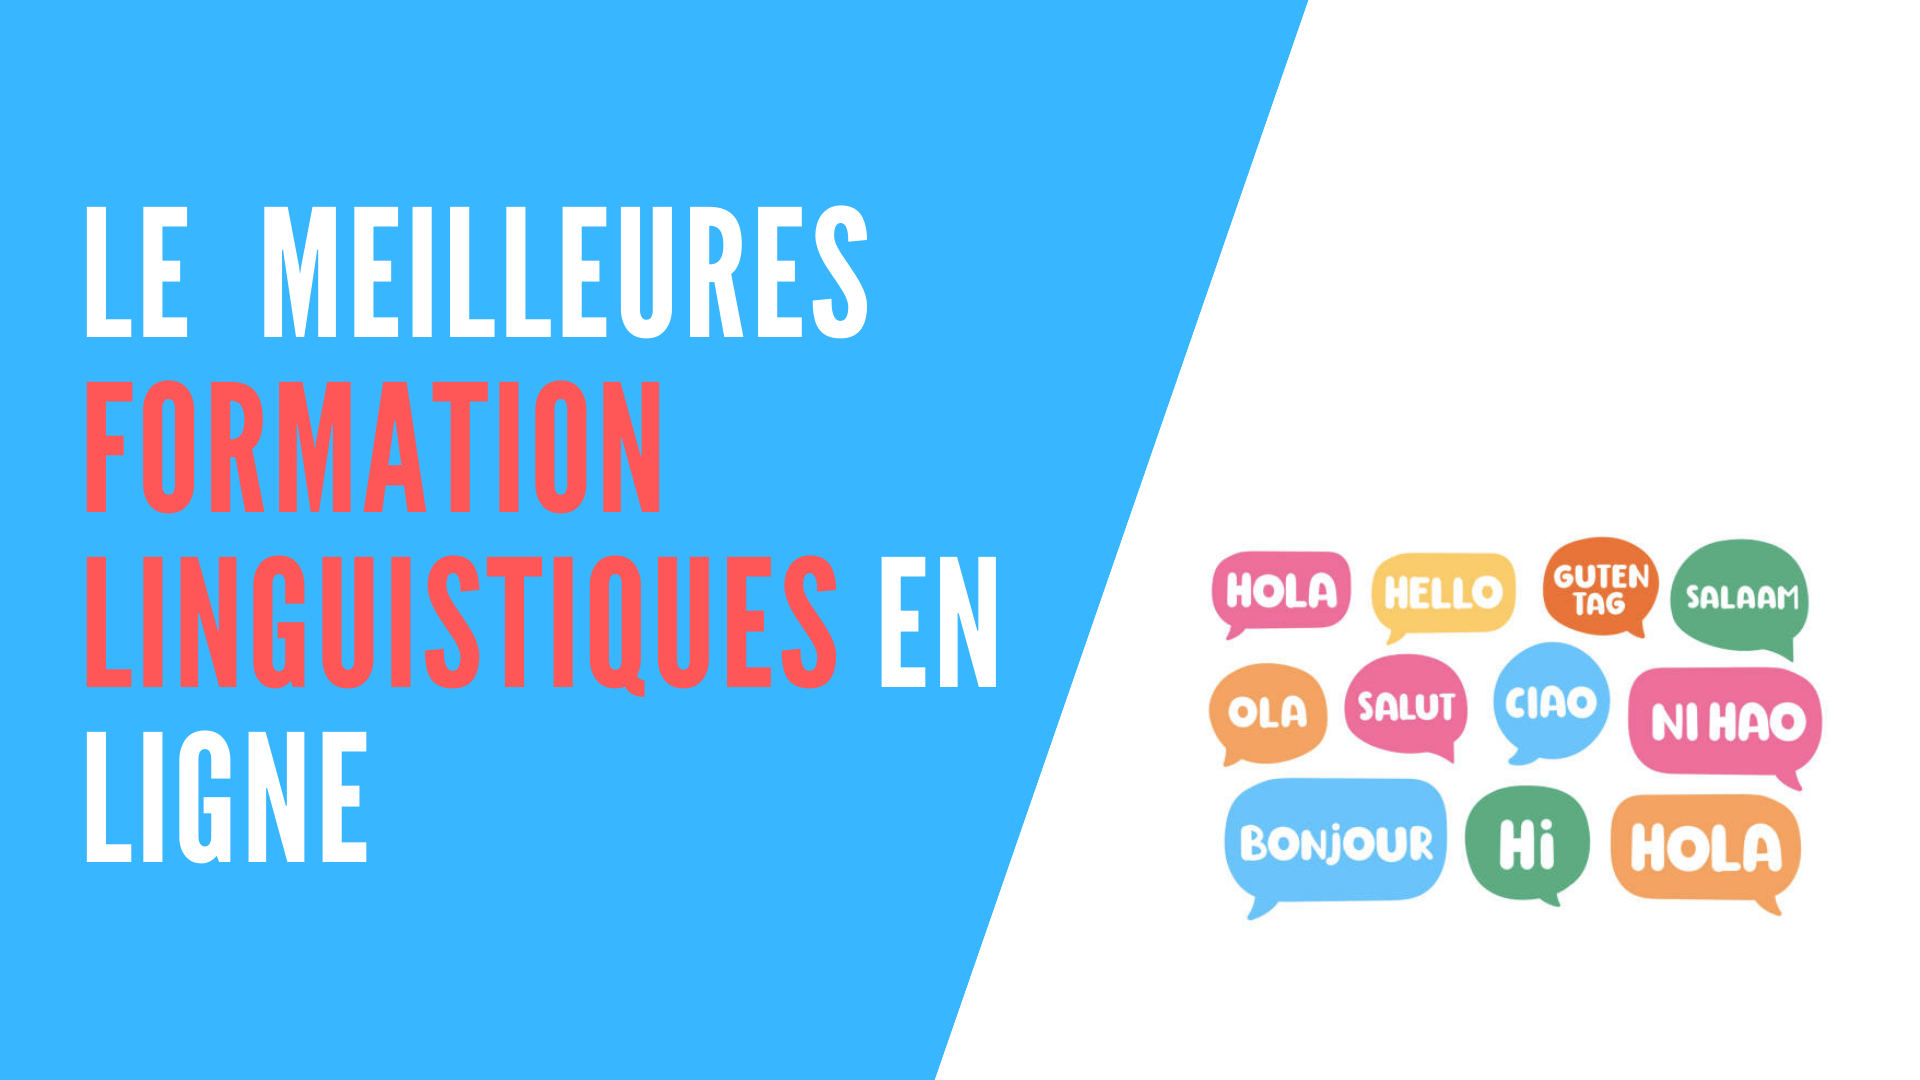 You are currently viewing Les meilleures formation linguistiques en ligne